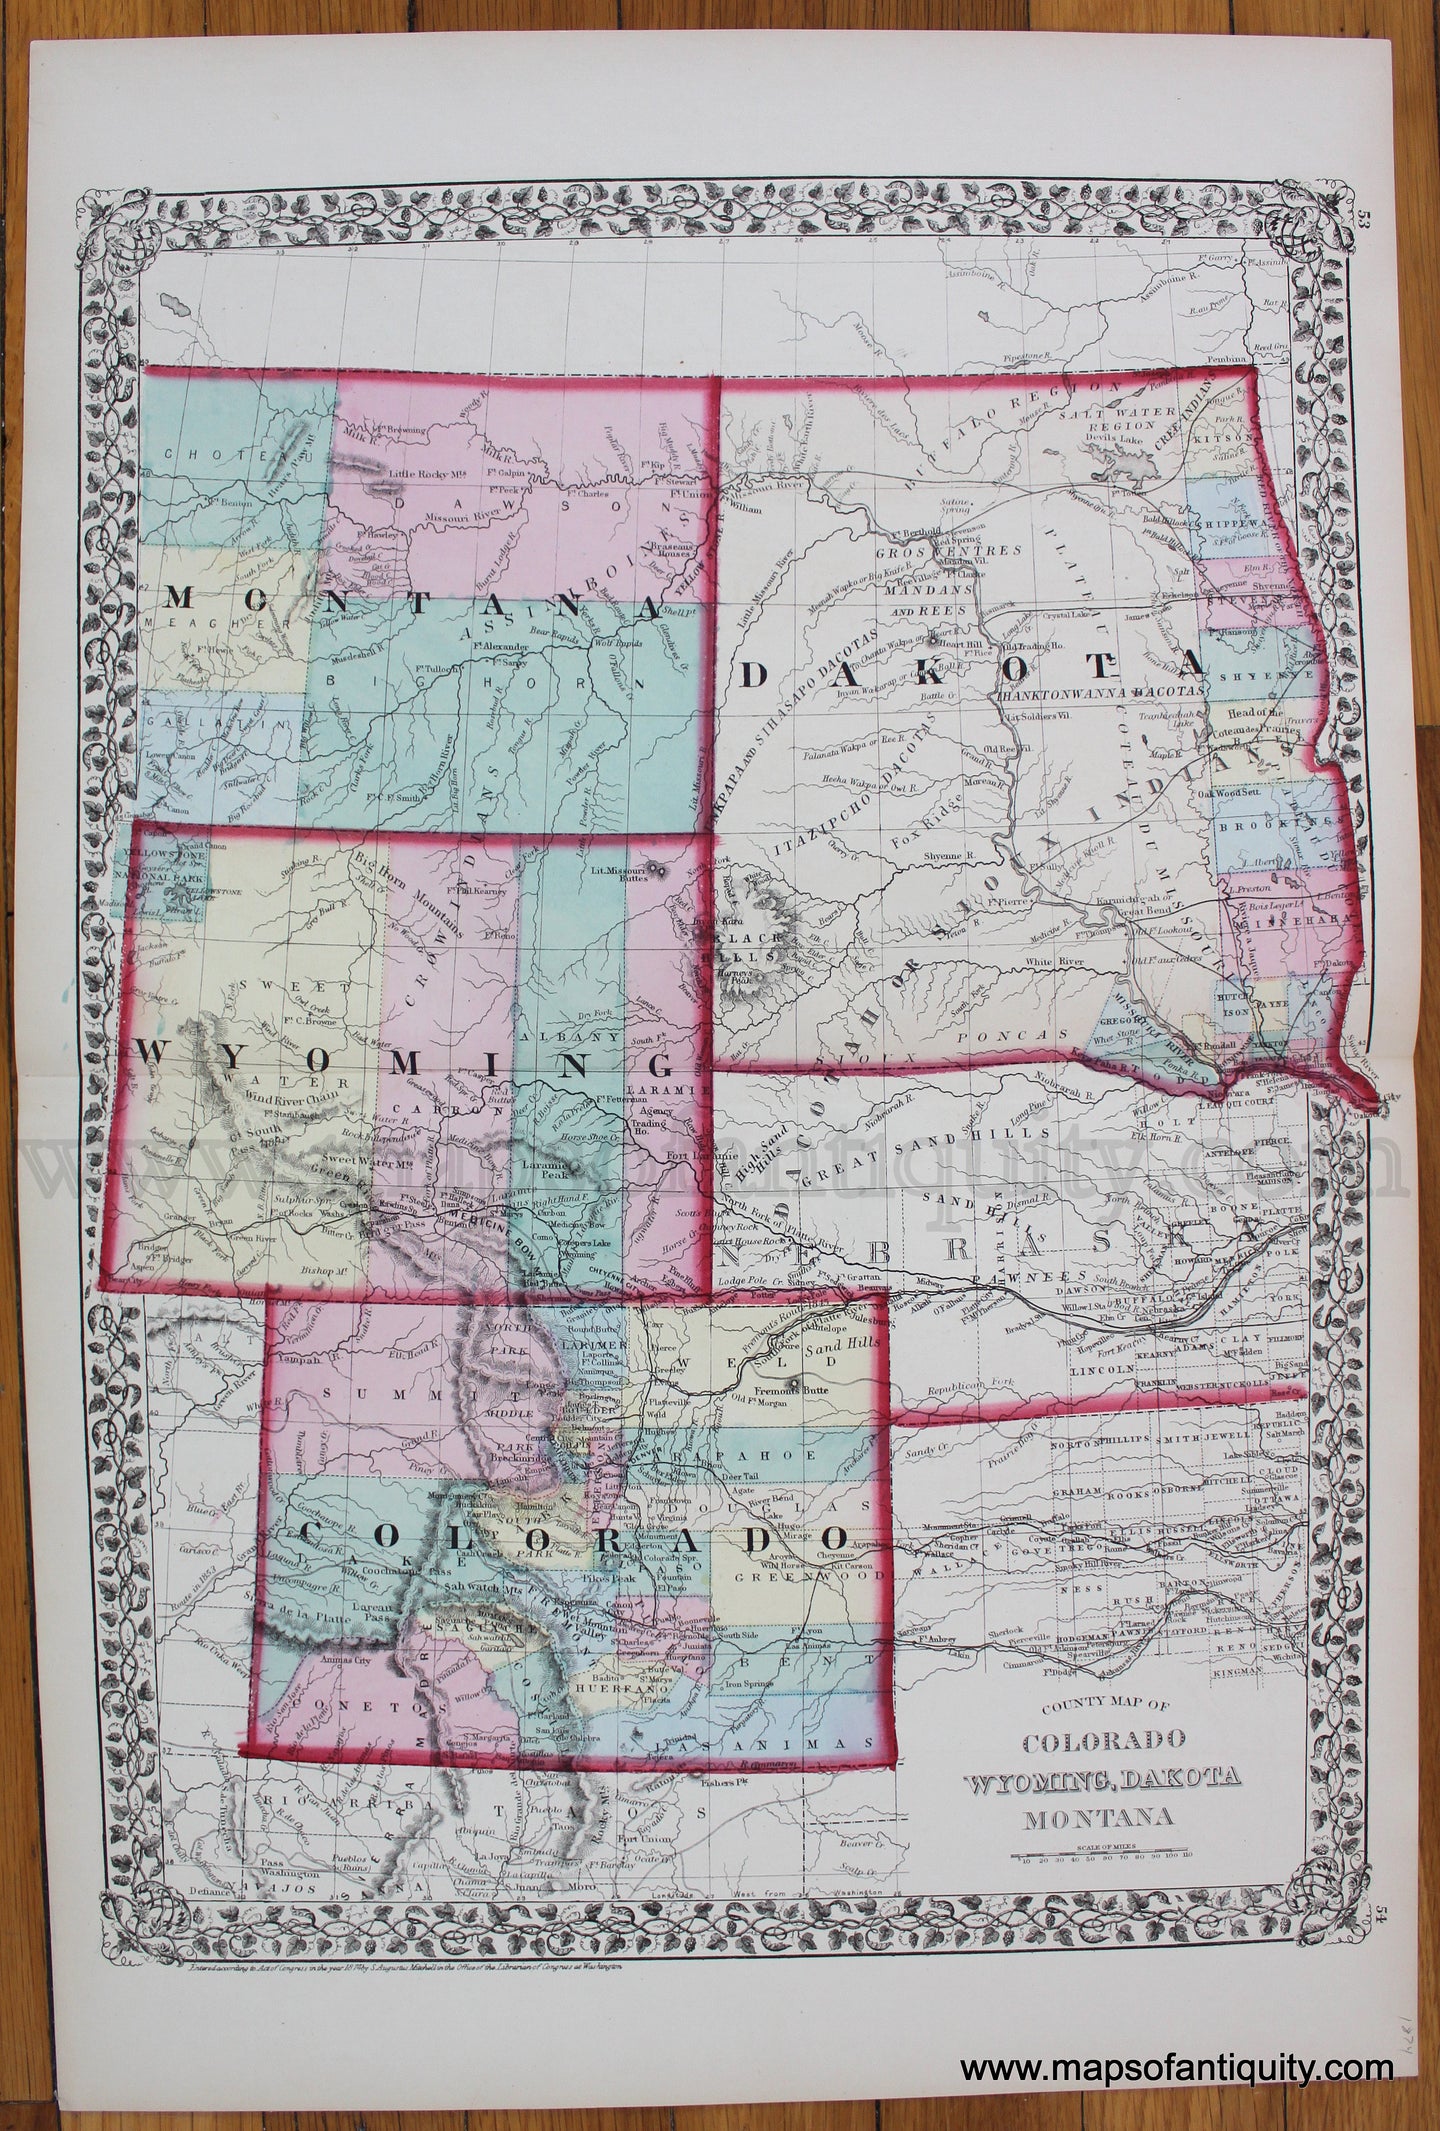 Antique-Map-County-Map-of-Colorado-Wyoming-Dakota-Montana-mitchell-1874-1870s-1800s-19th-century